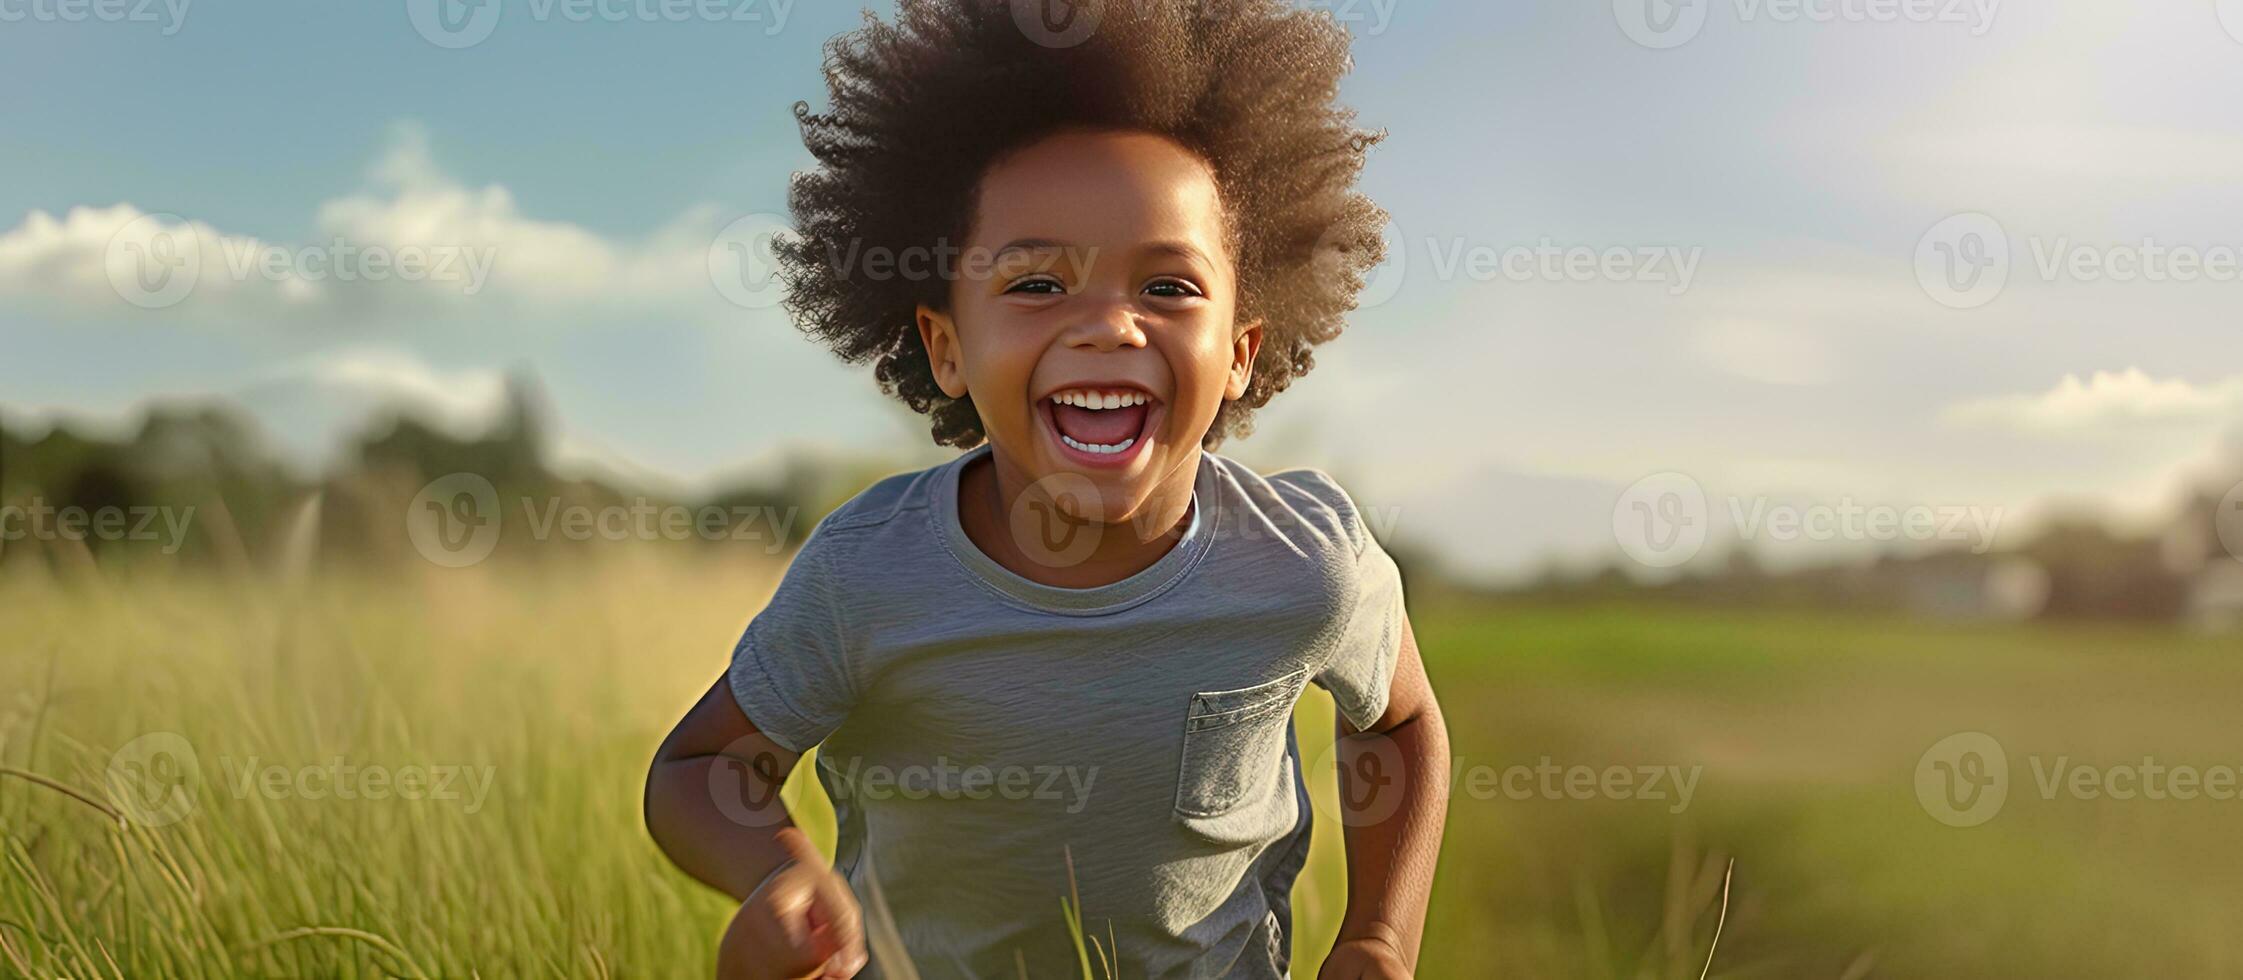 activo africano americano chico alegremente jugando al aire libre foto